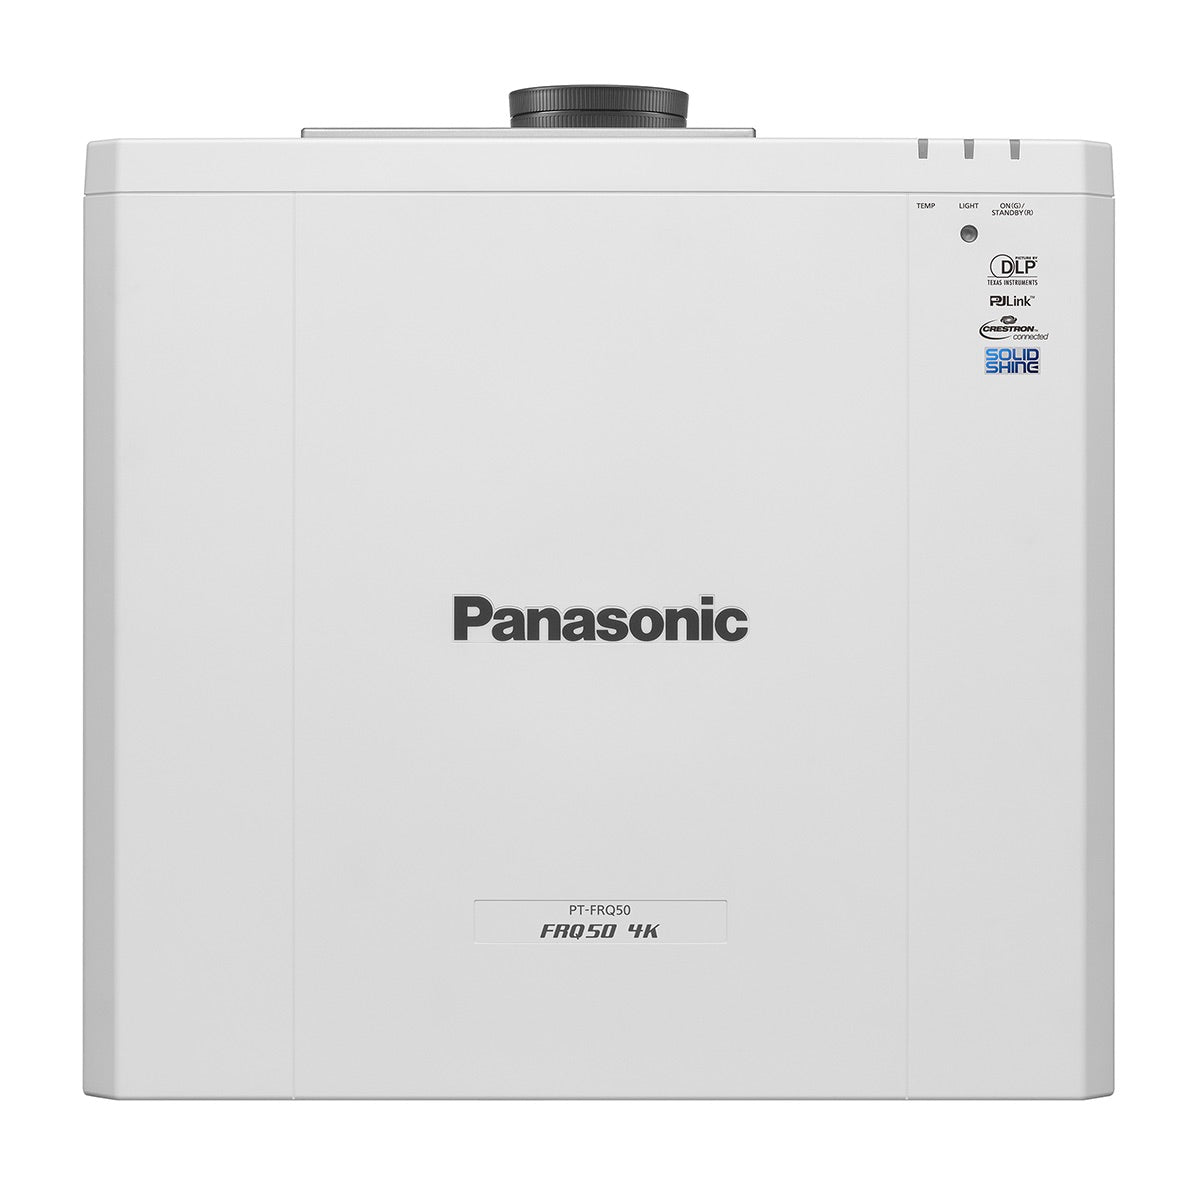 Panasonic PT-FRQ50 - 1-Chip DLP 4K Laser Projector, white, top